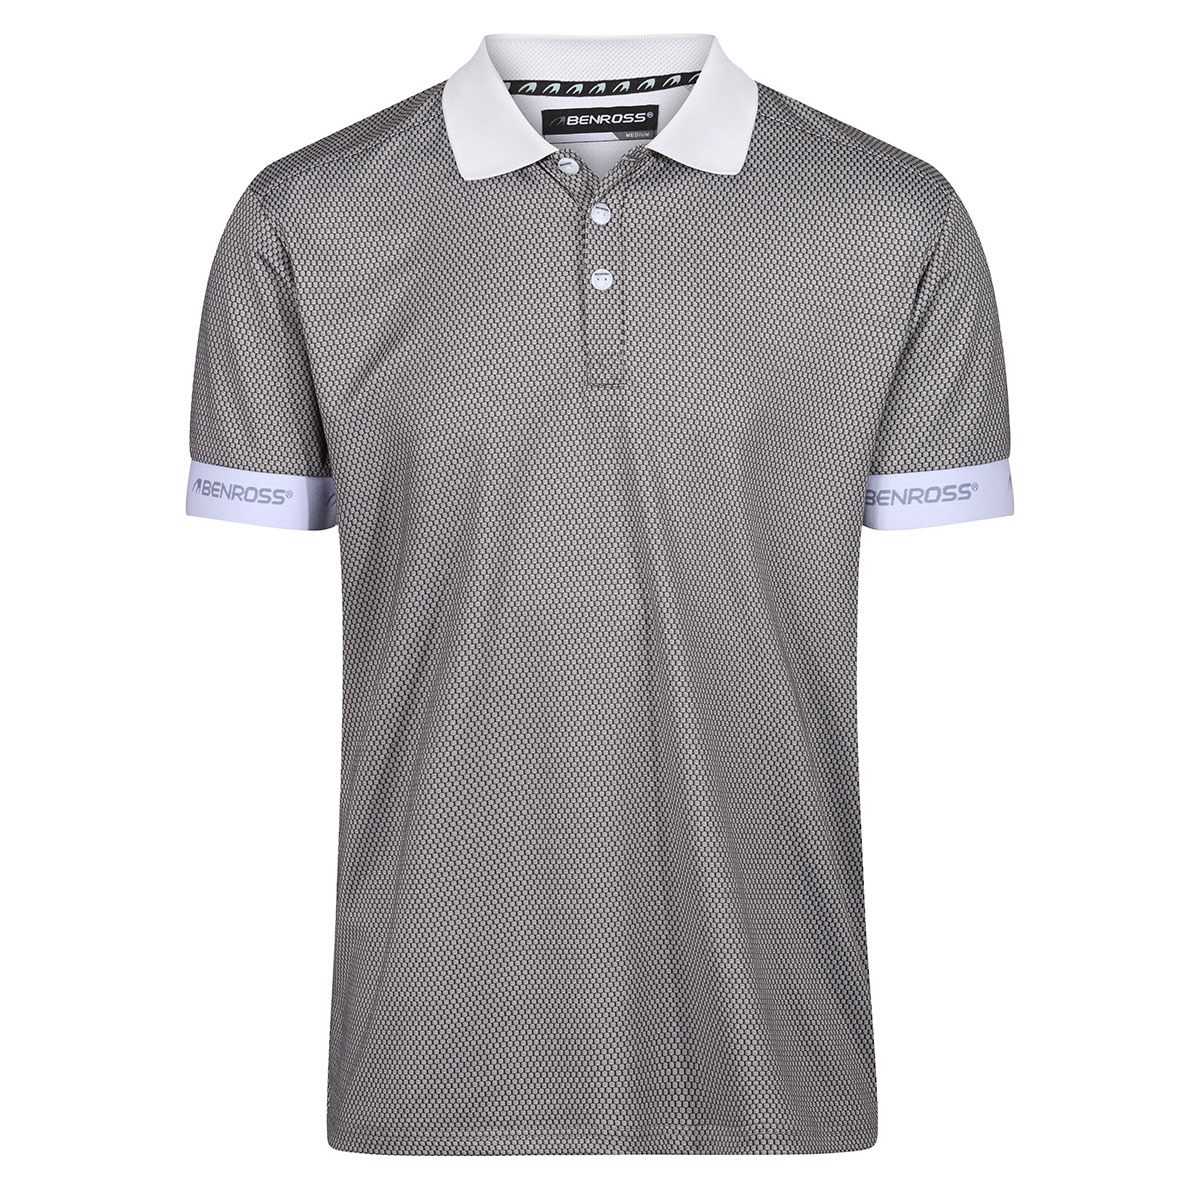 Benross Men's Honeycomb Jacquard Golf Polo Shirt from american golf